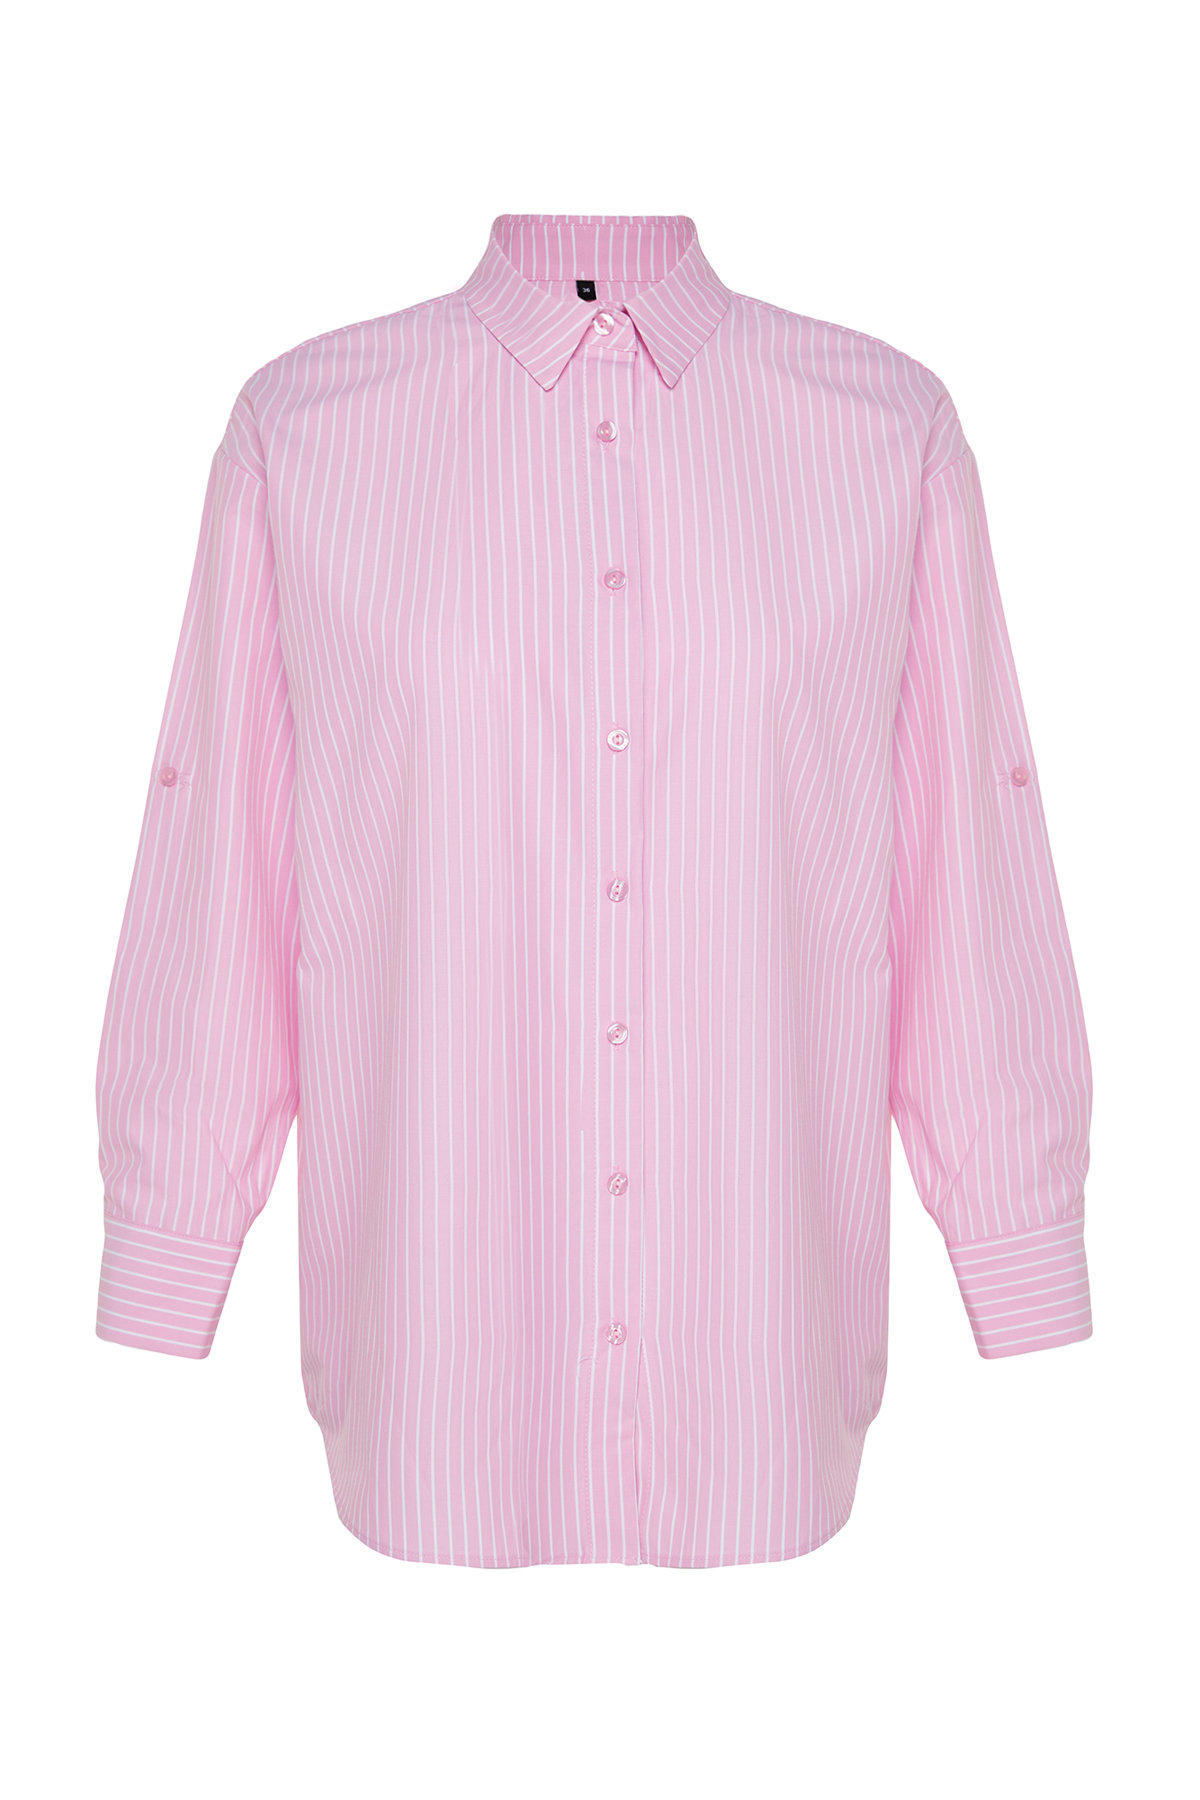 Полосатая тканая рубашка Trendyol, розовый полосатая рубашка trendyol черный